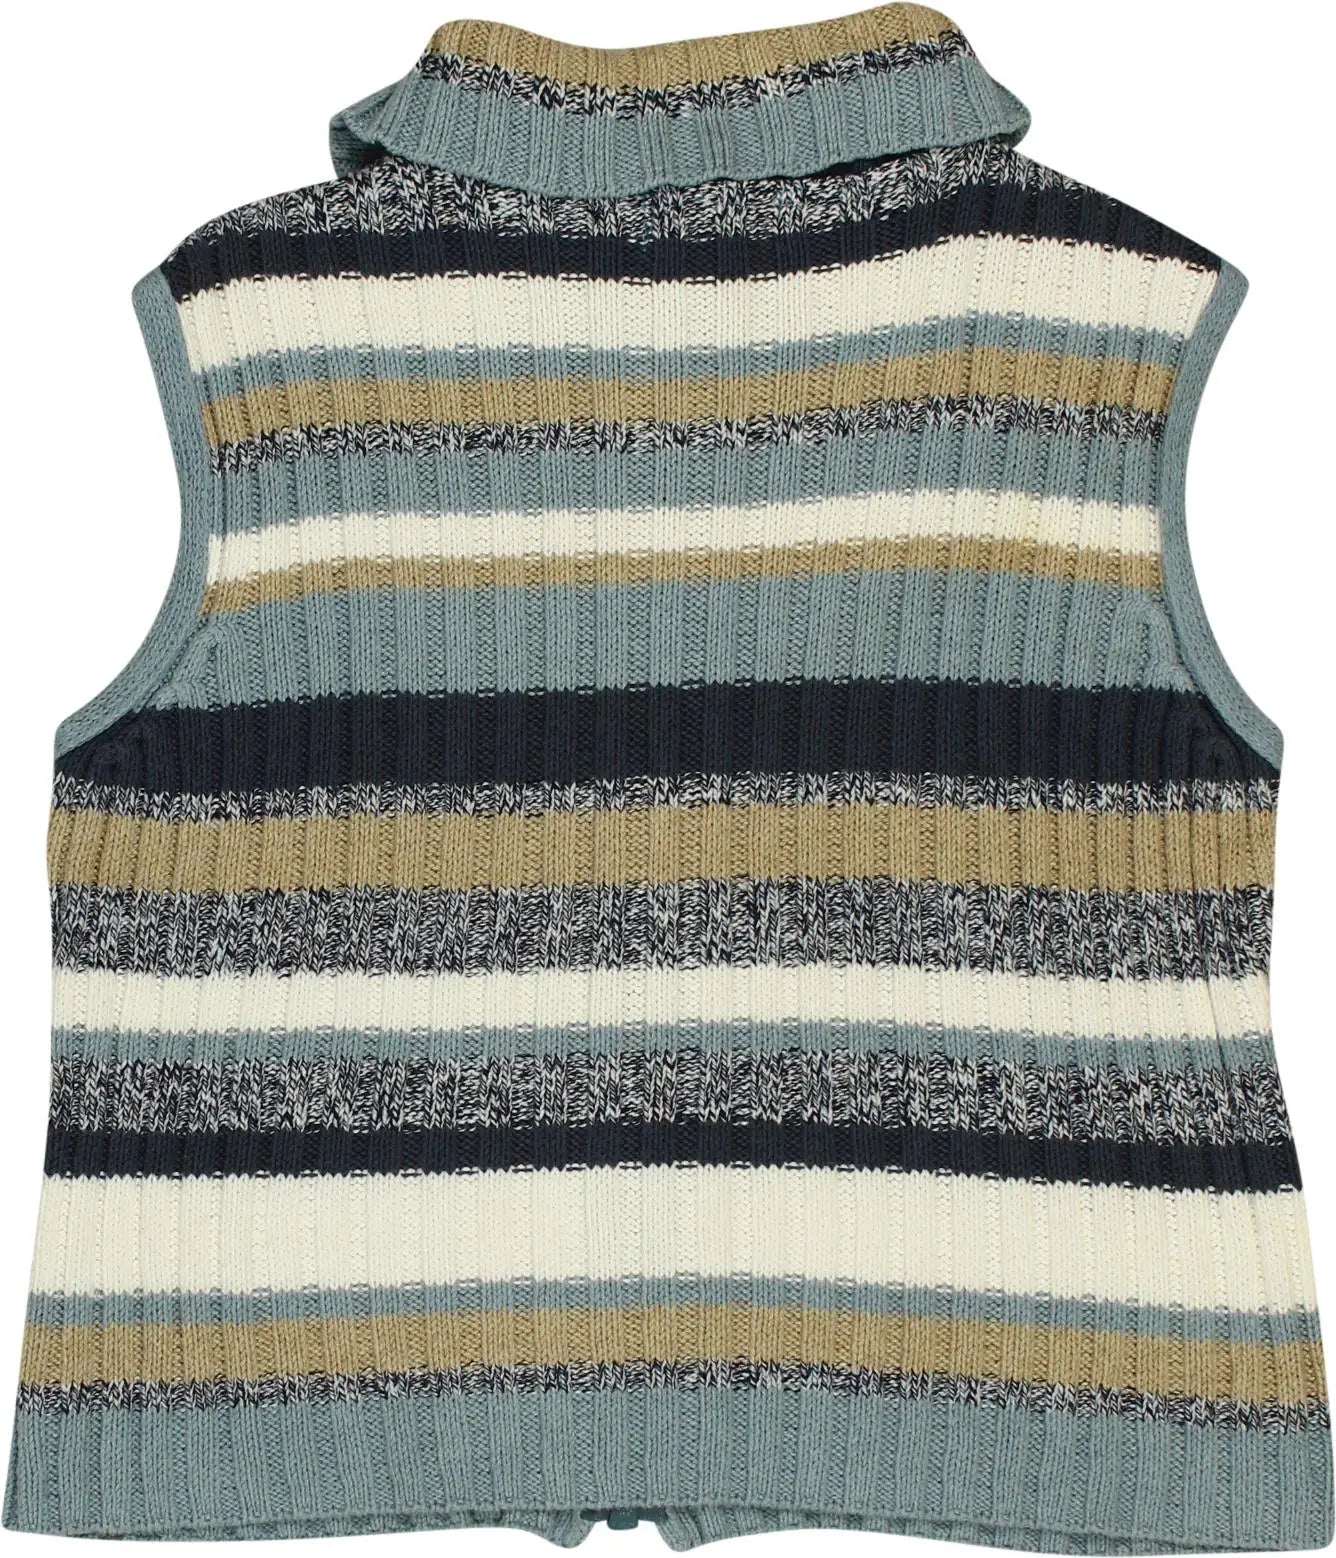 Miss Etam - Striped Vest- ThriftTale.com - Vintage and second handclothing